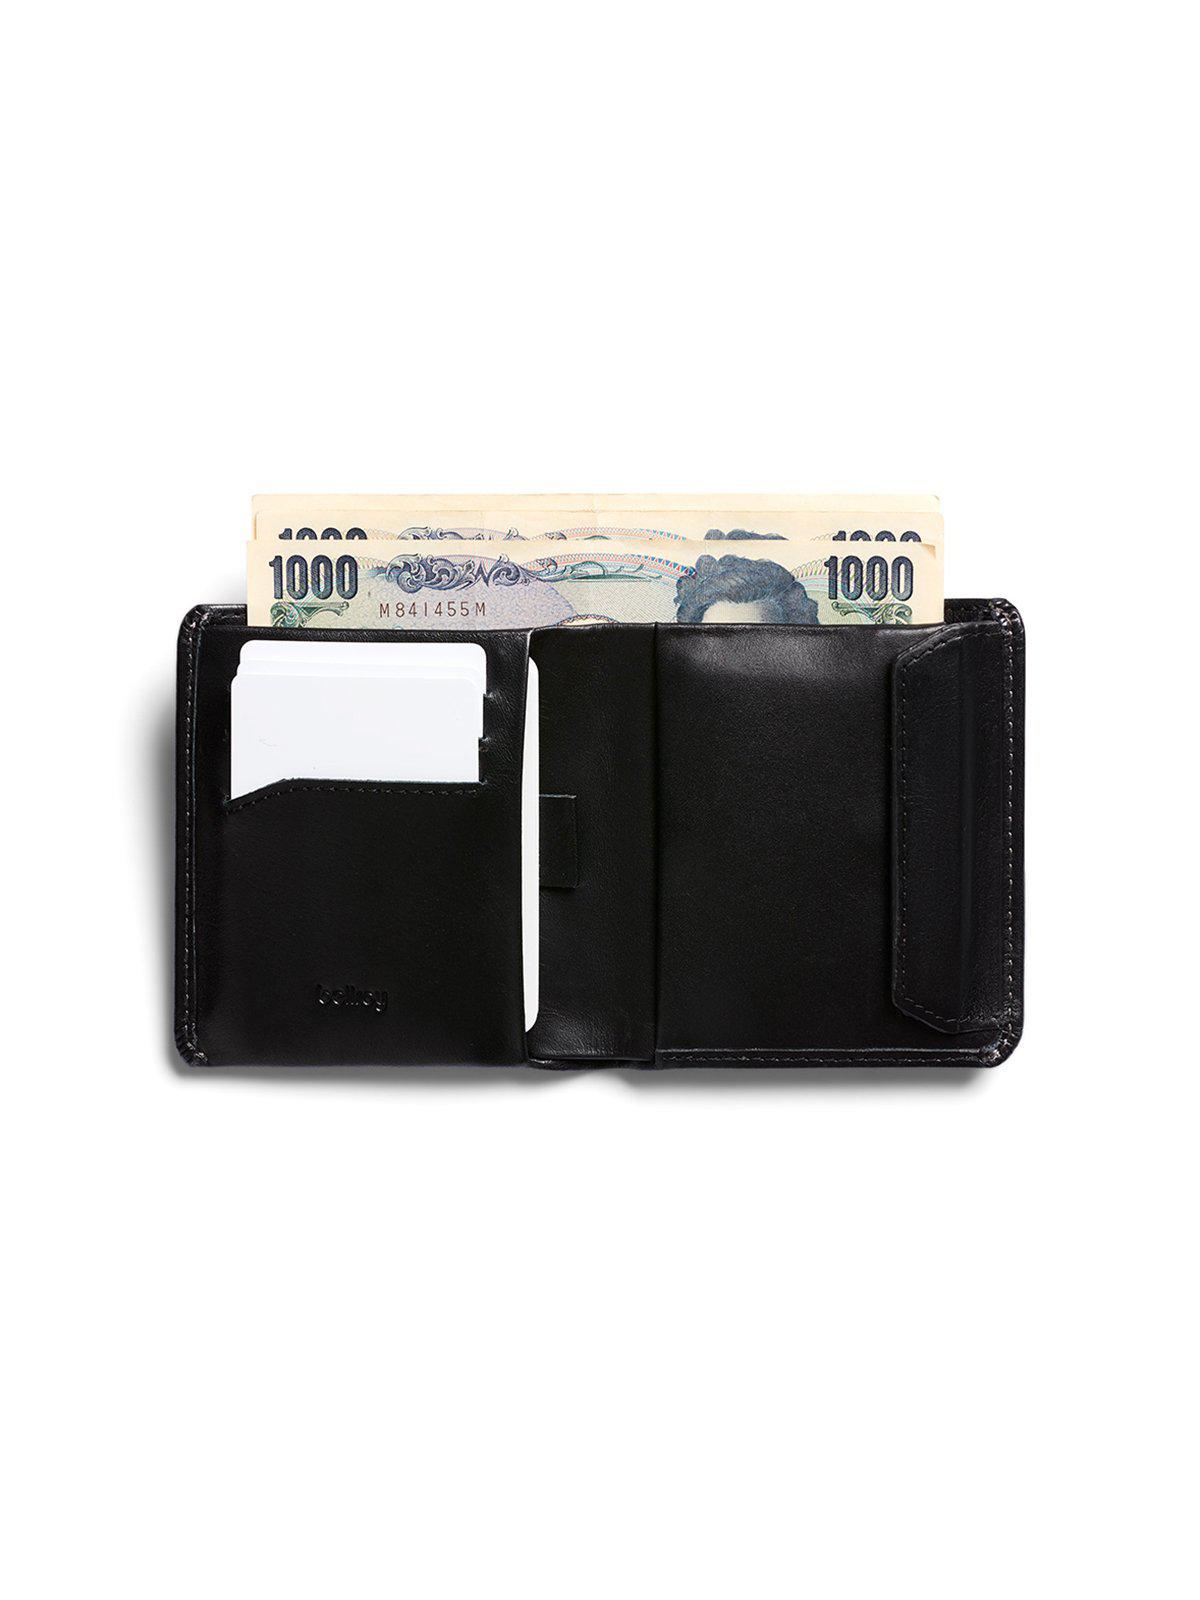 Bellroy Coin Wallet Black RFID